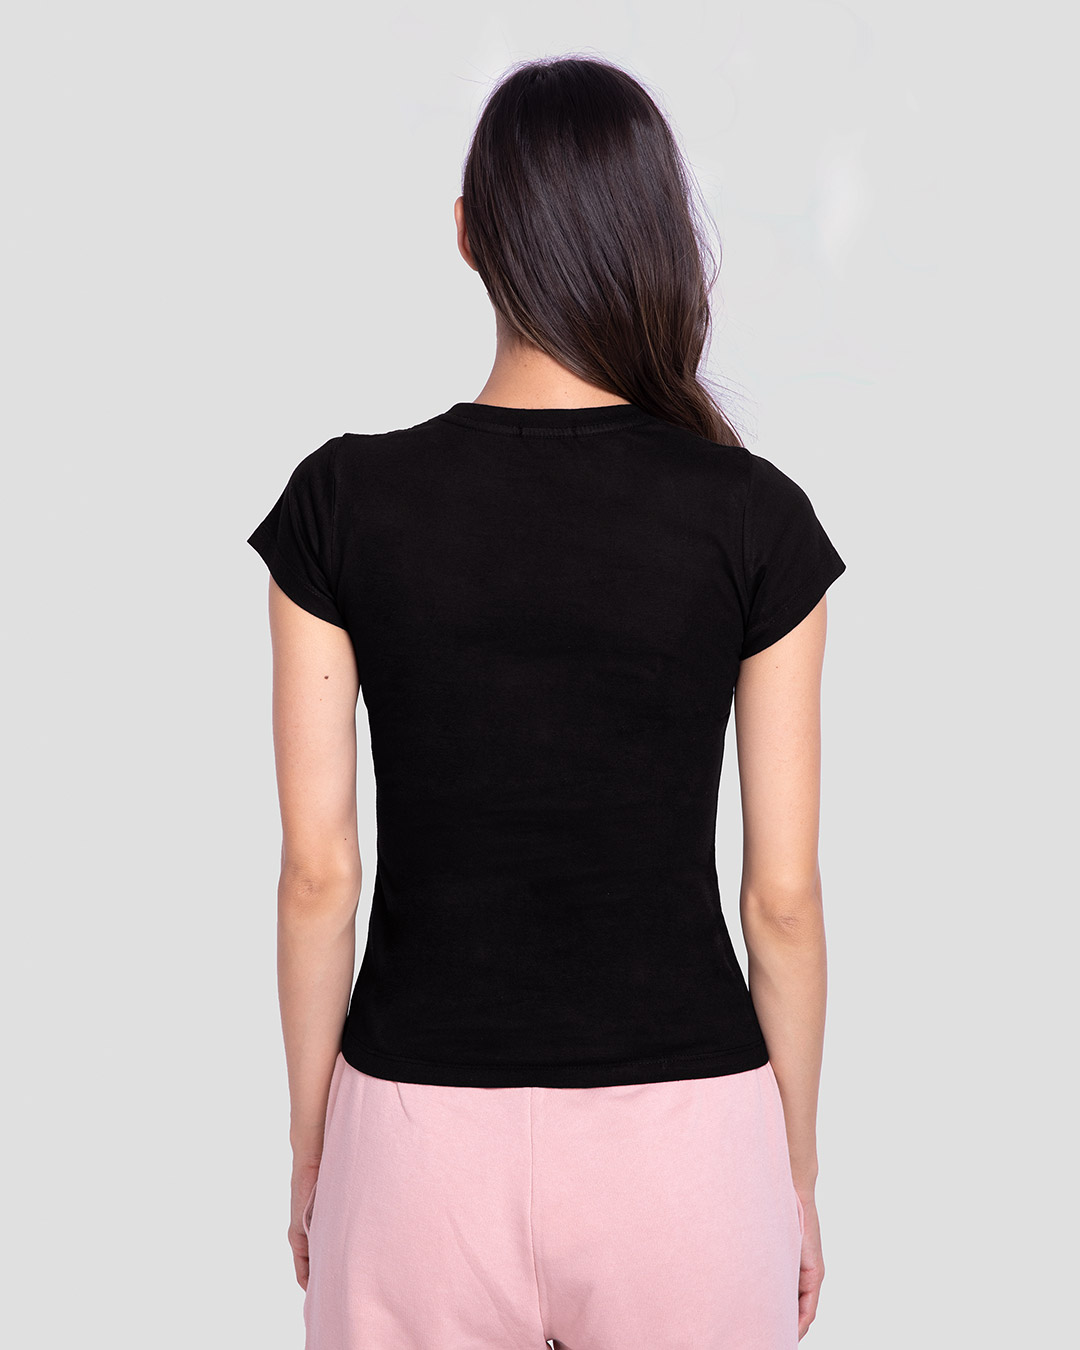 Shop Namaste But Half Sleeve Printed T-Shirt Black-Back